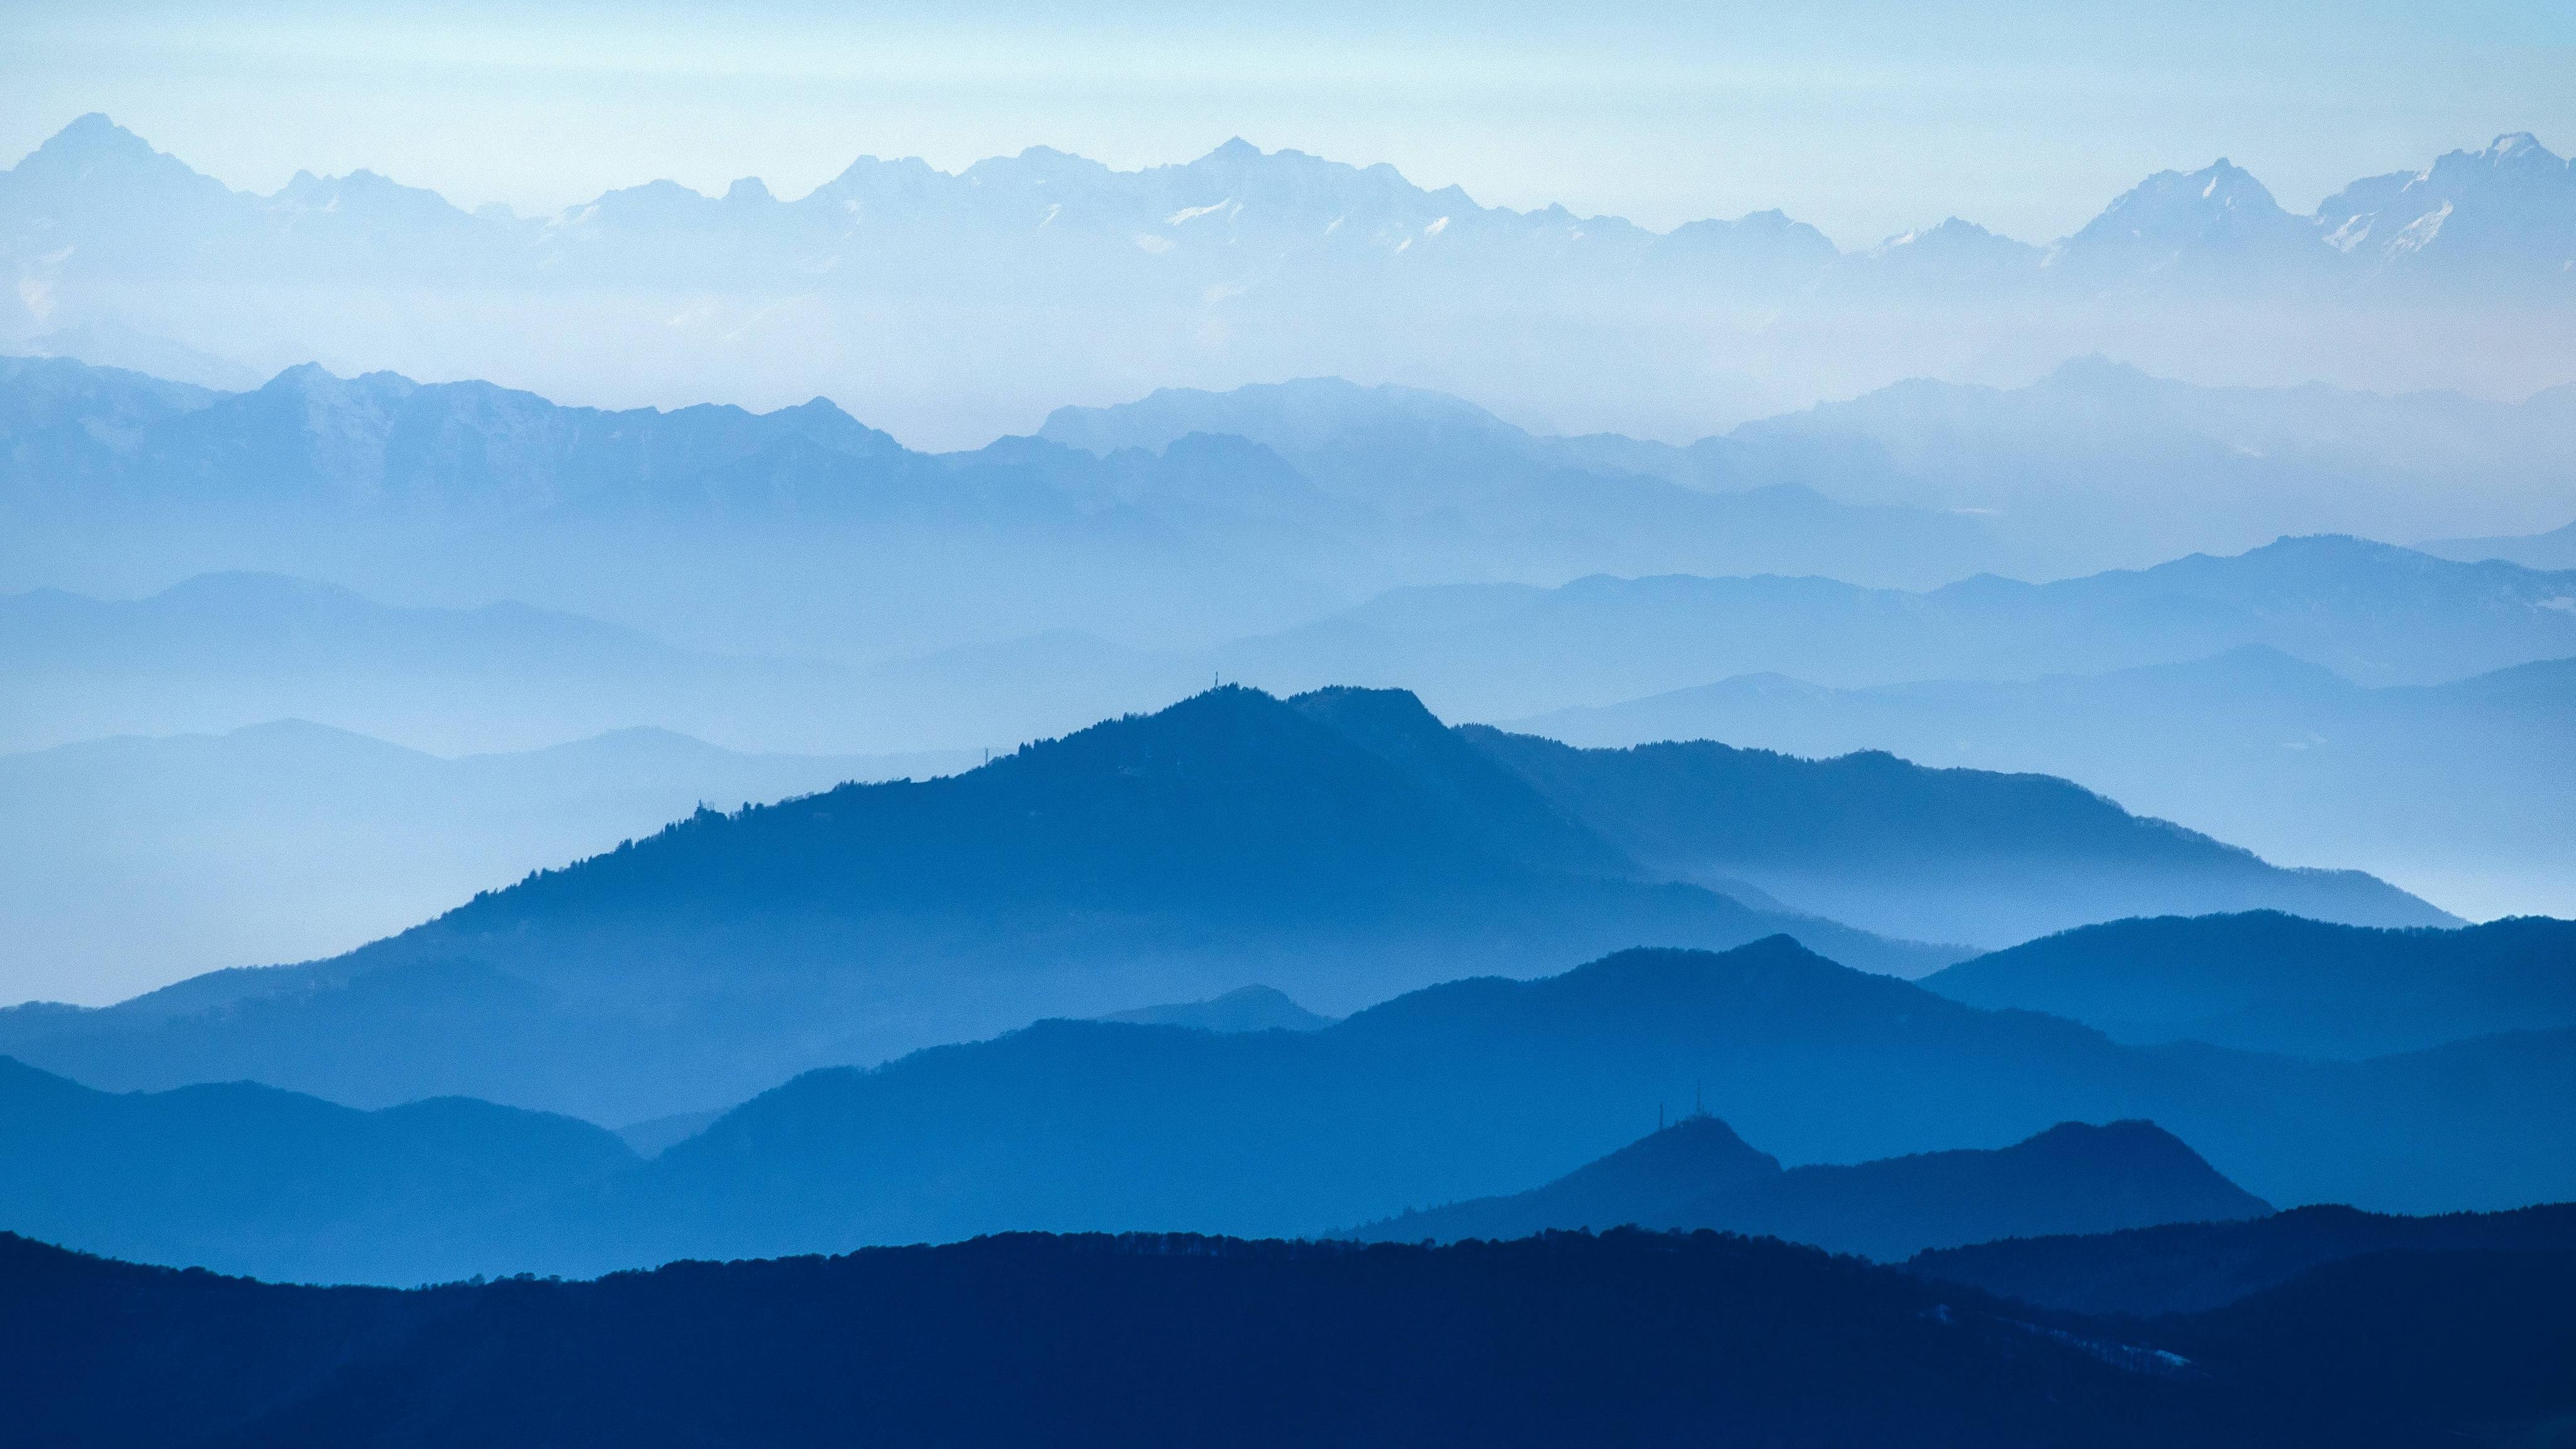 A photo of a mountain range in blue hues. - Mountain